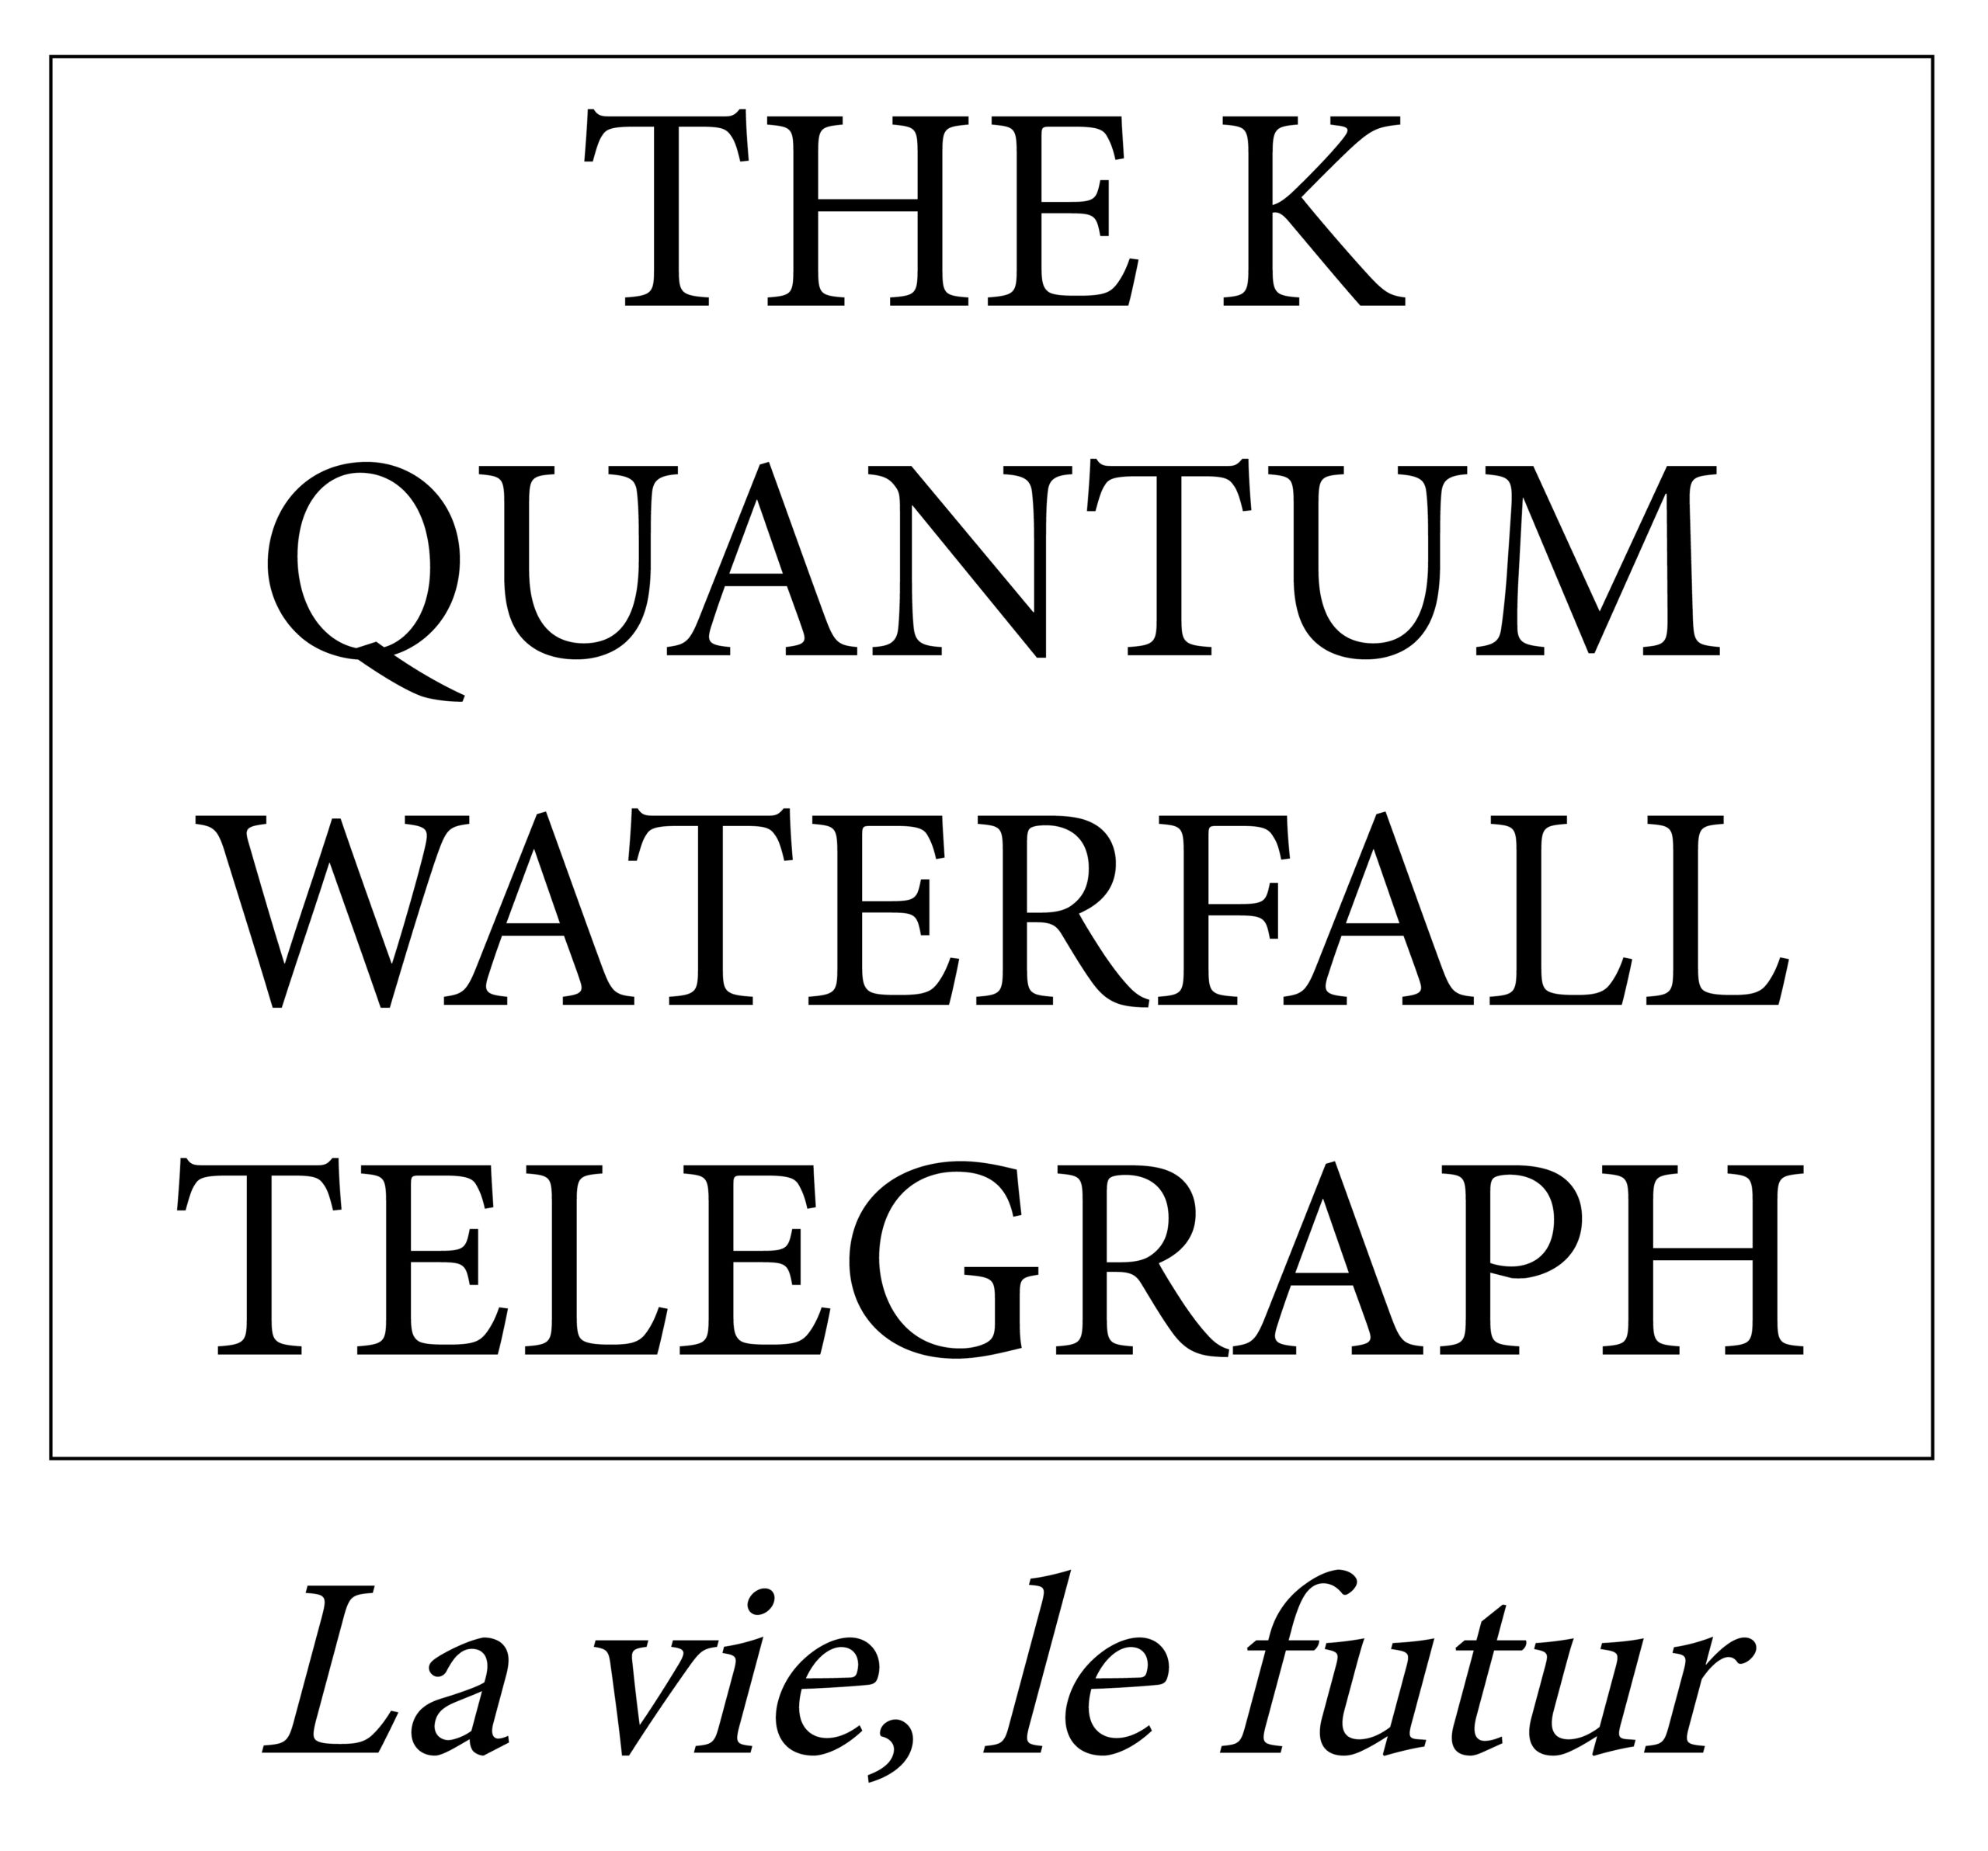 The K Quantum Waterfall Telegraph